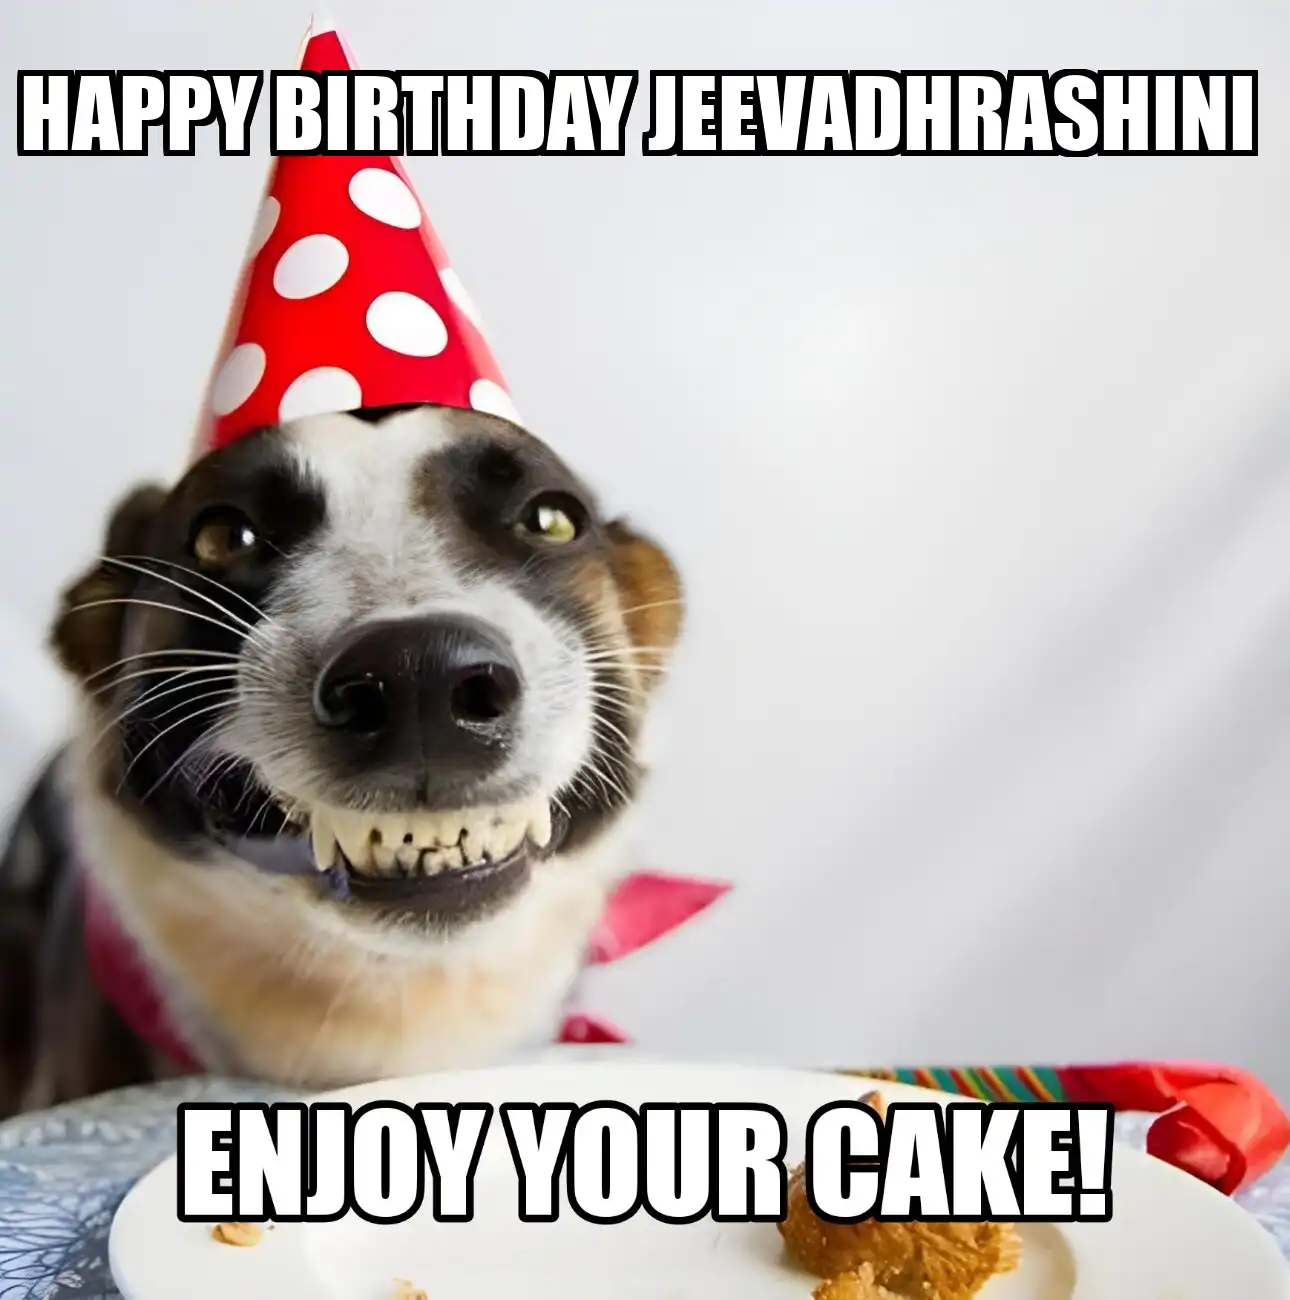 Happy Birthday Jeevadhrashini Enjoy Your Cake Dog Meme